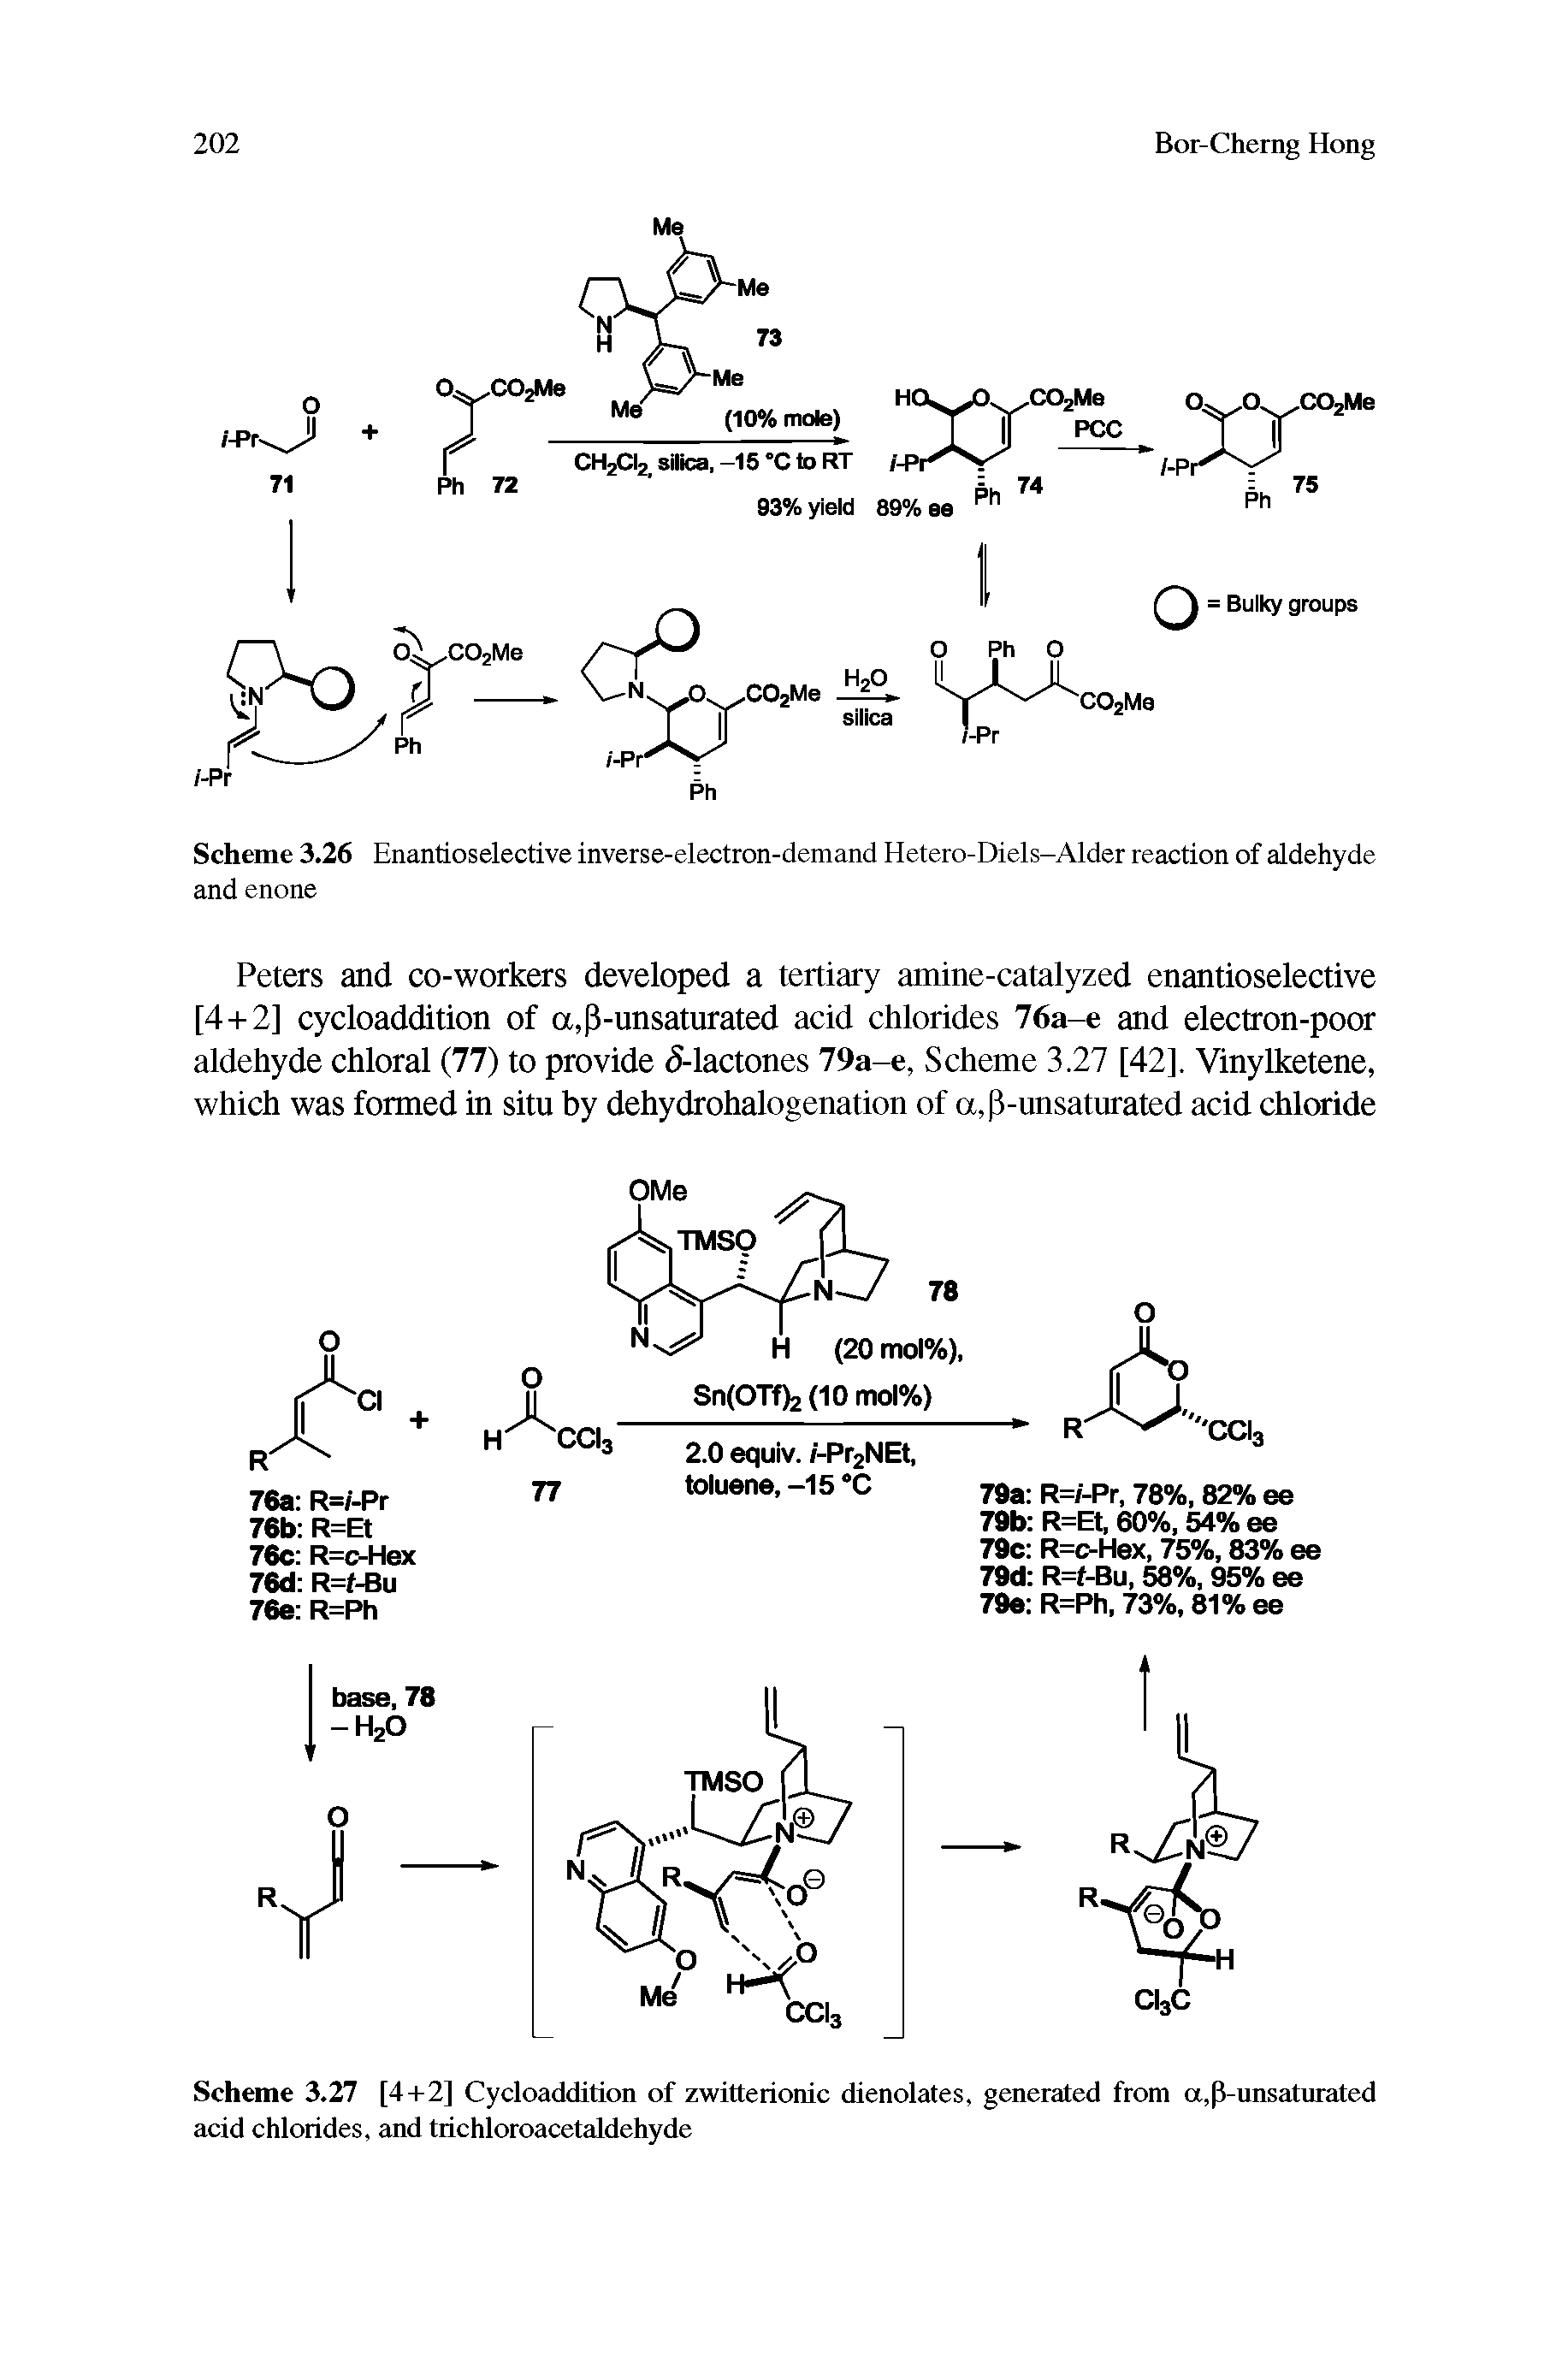 Scheme 3.26 Enantioselective inverse-electron-demand Hetero-Diels-Alder reaction of aldehyde and enone...